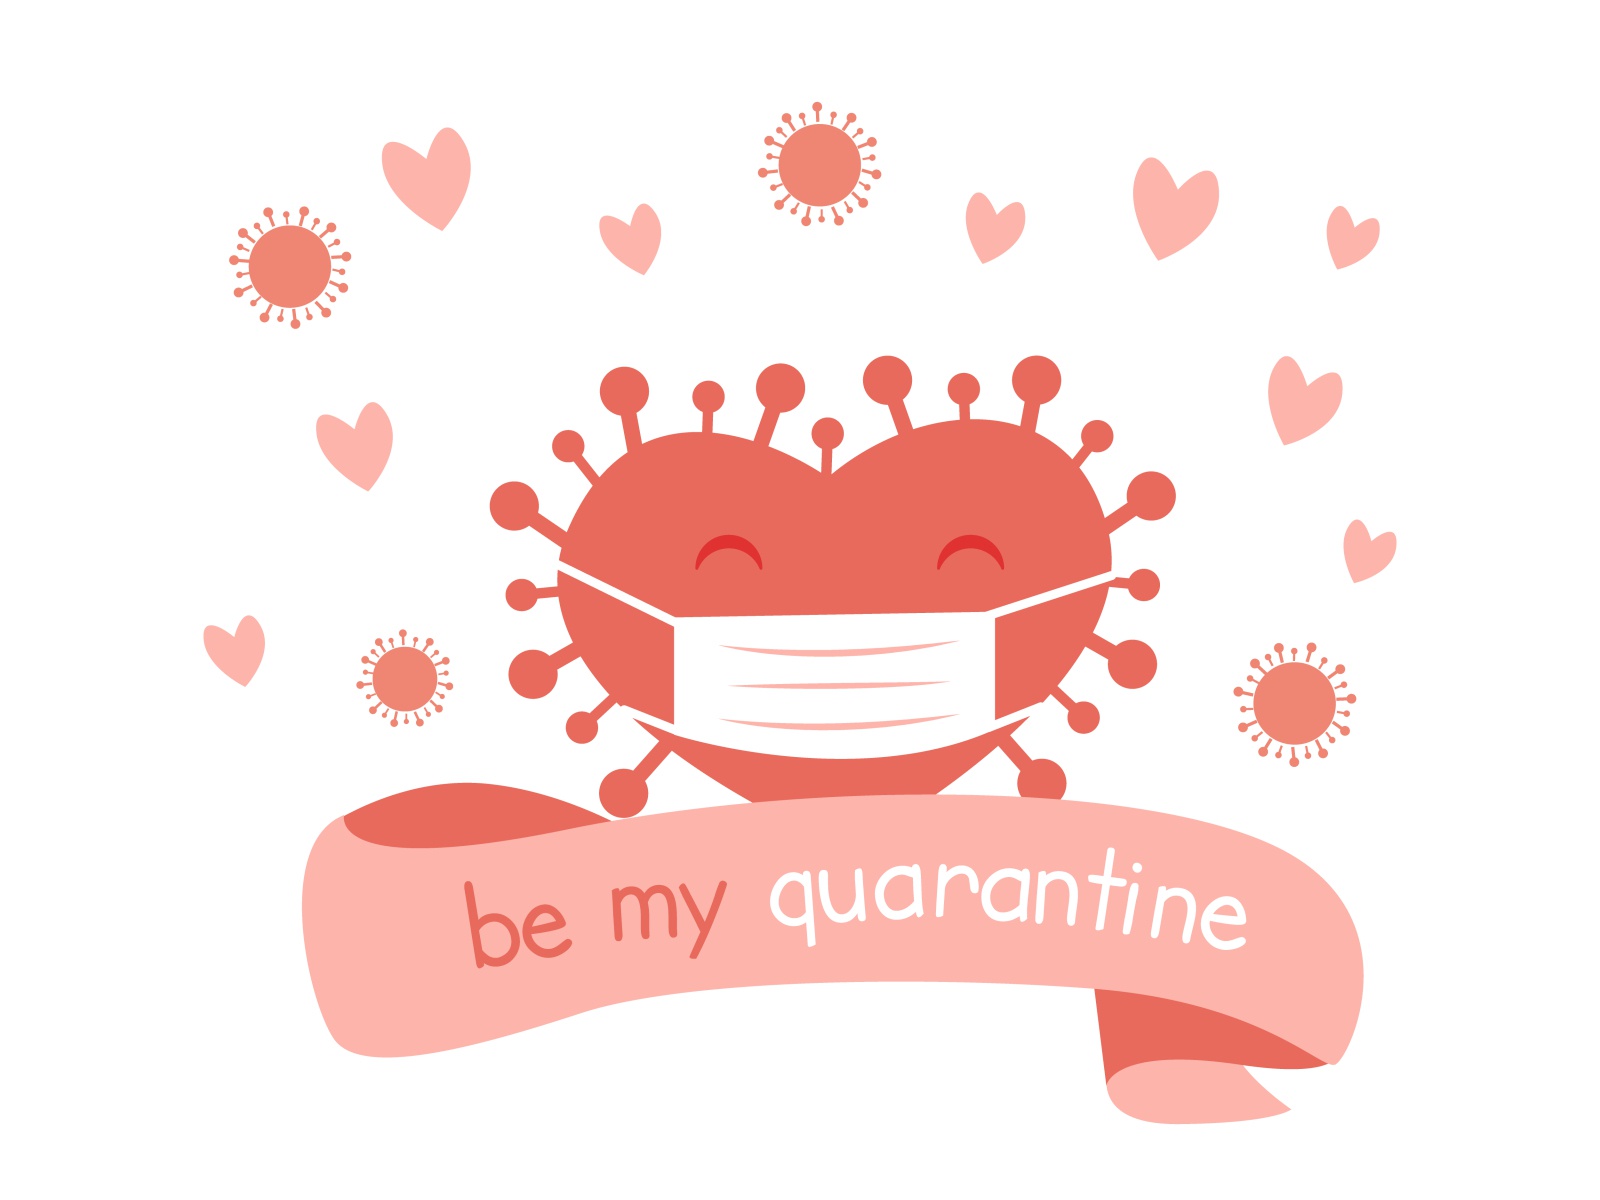 Covid-19 valentine card - Be my quarantine